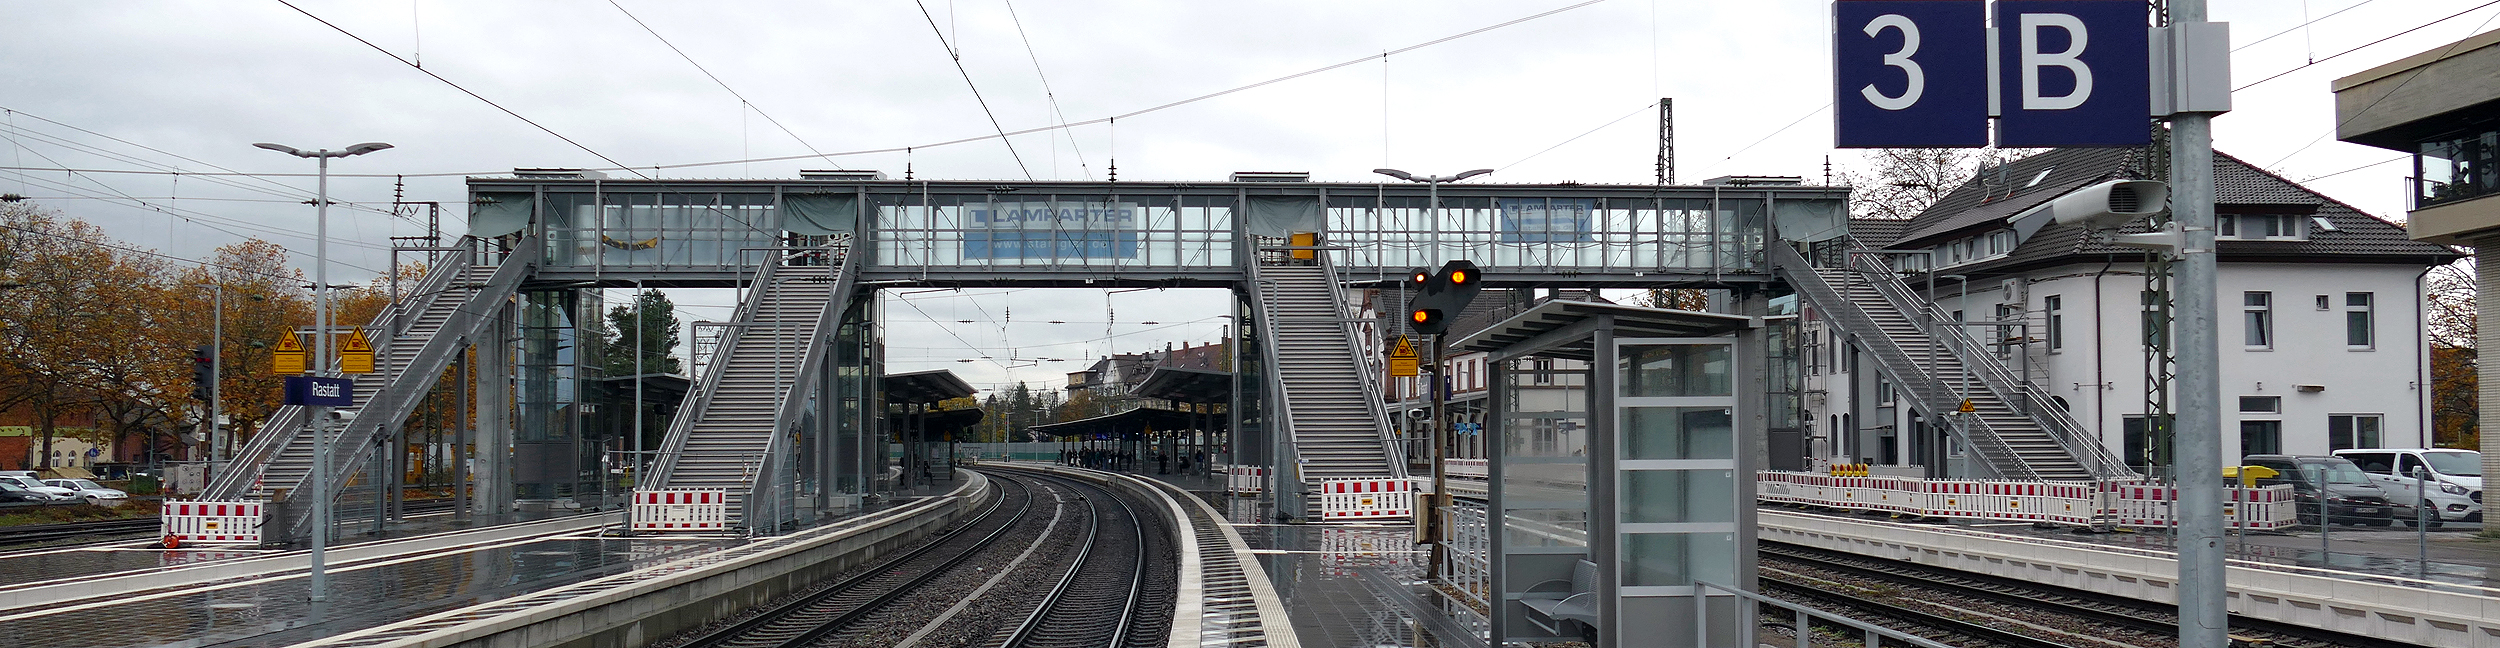 Pedestrian footbridge over the tracks at the railroad station in Rastatt